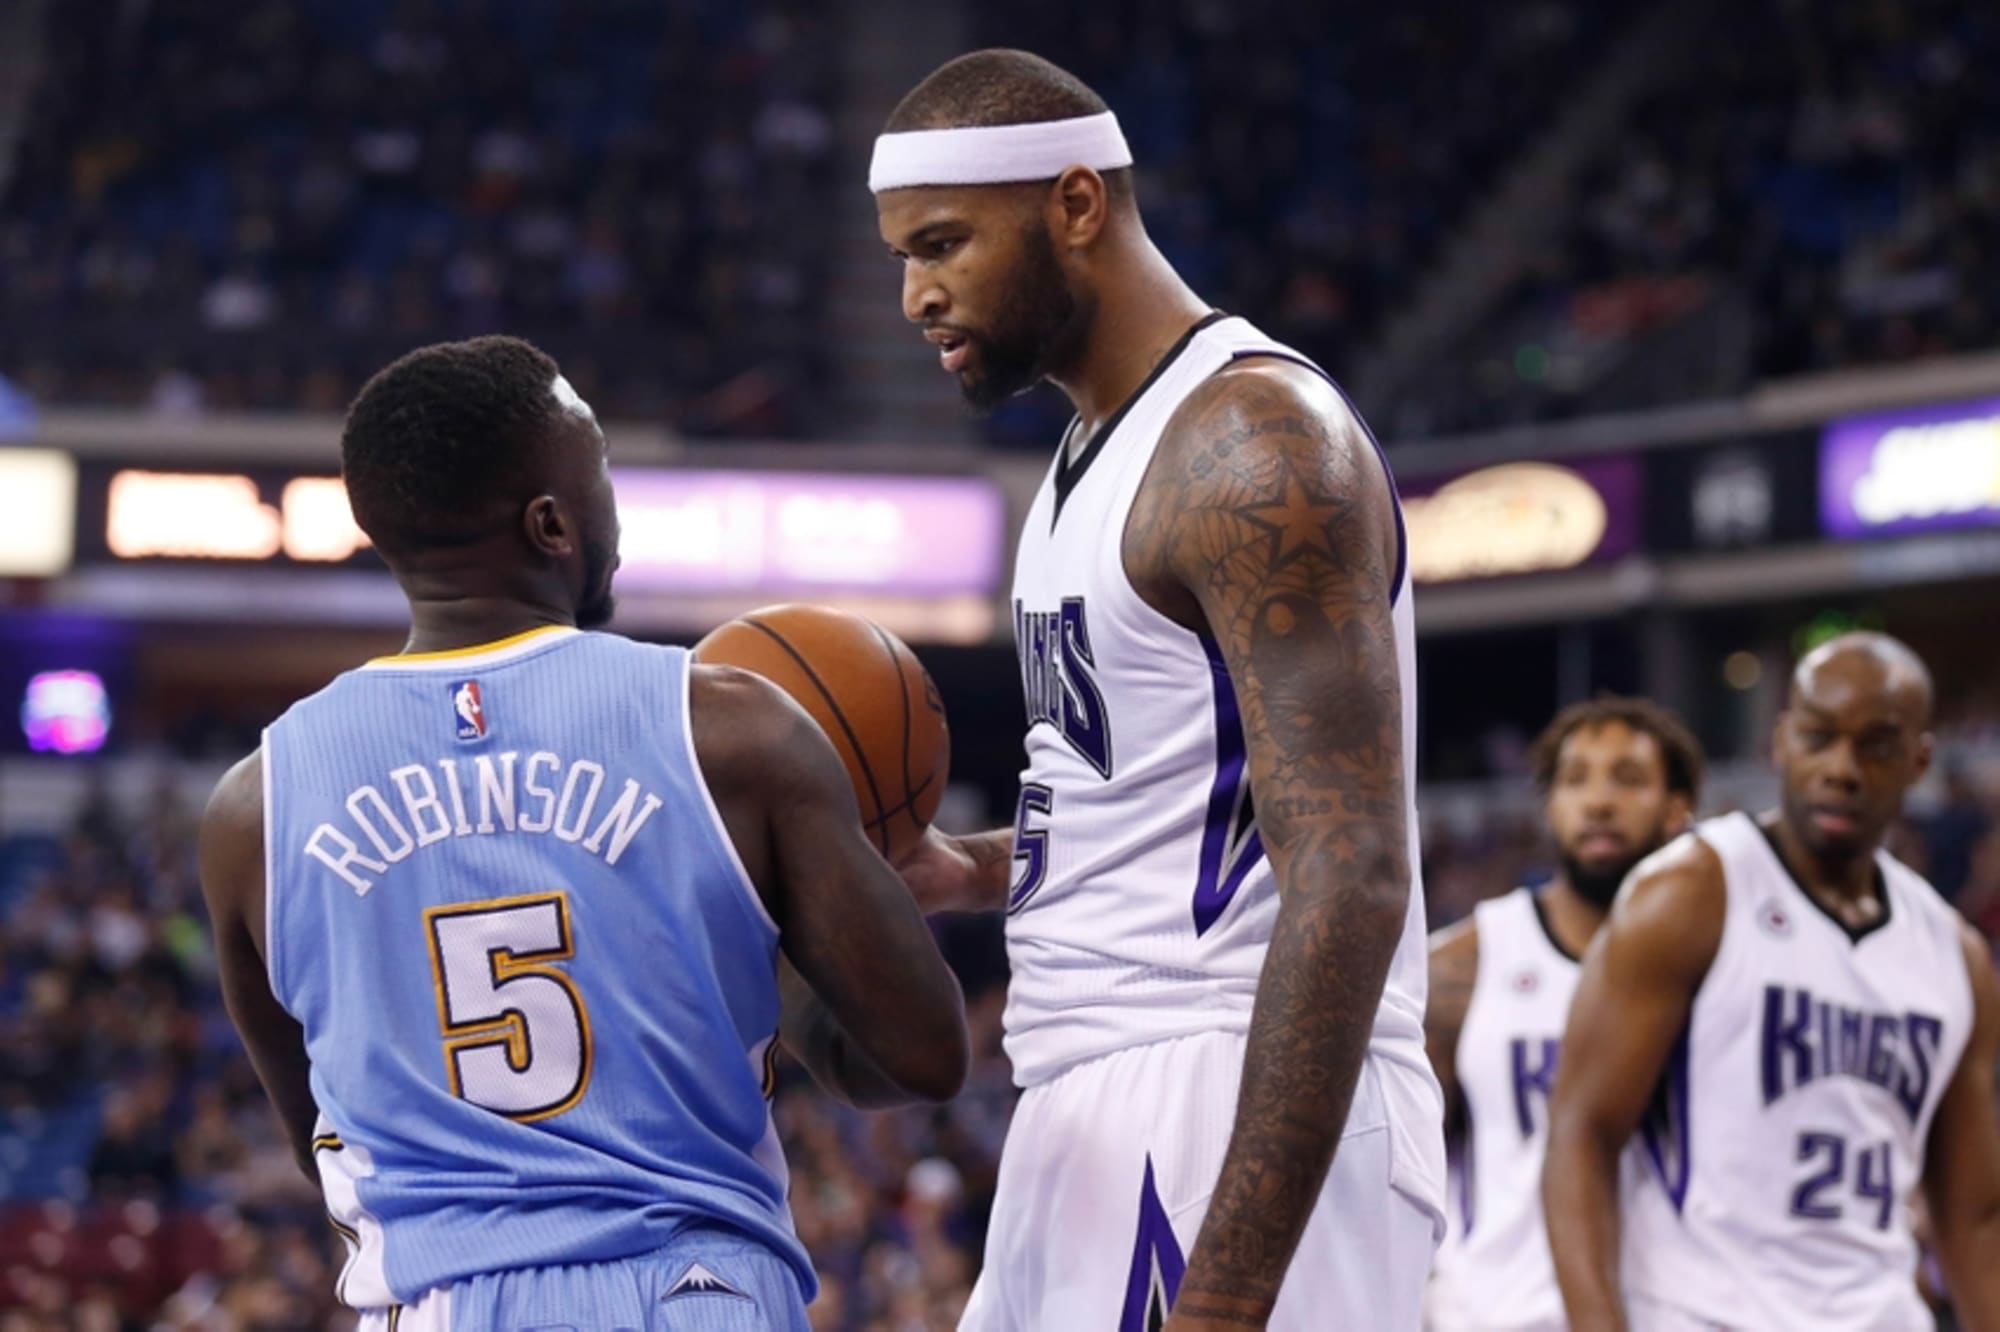 Sacramento Kings: Time To Cut Losses And Tank